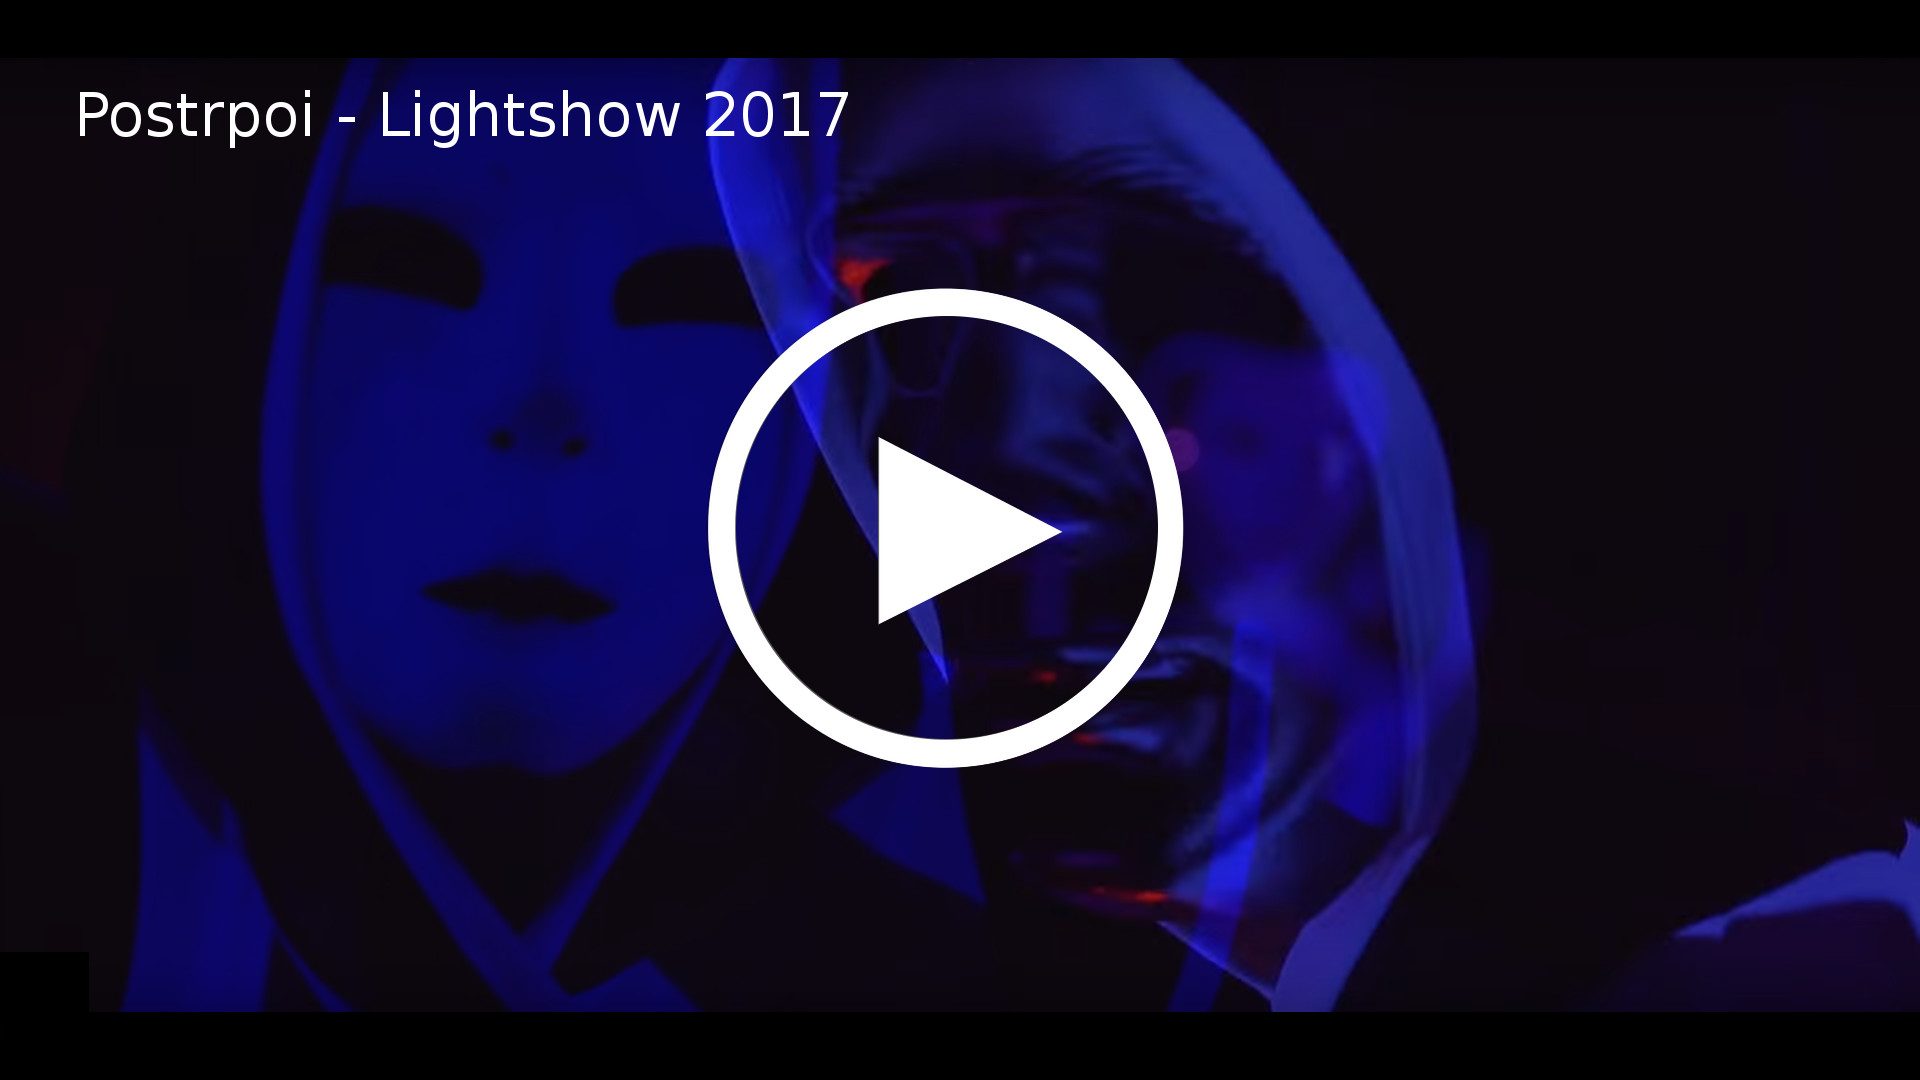 led show, laser show, uv show - skupina Postrpoi promo video